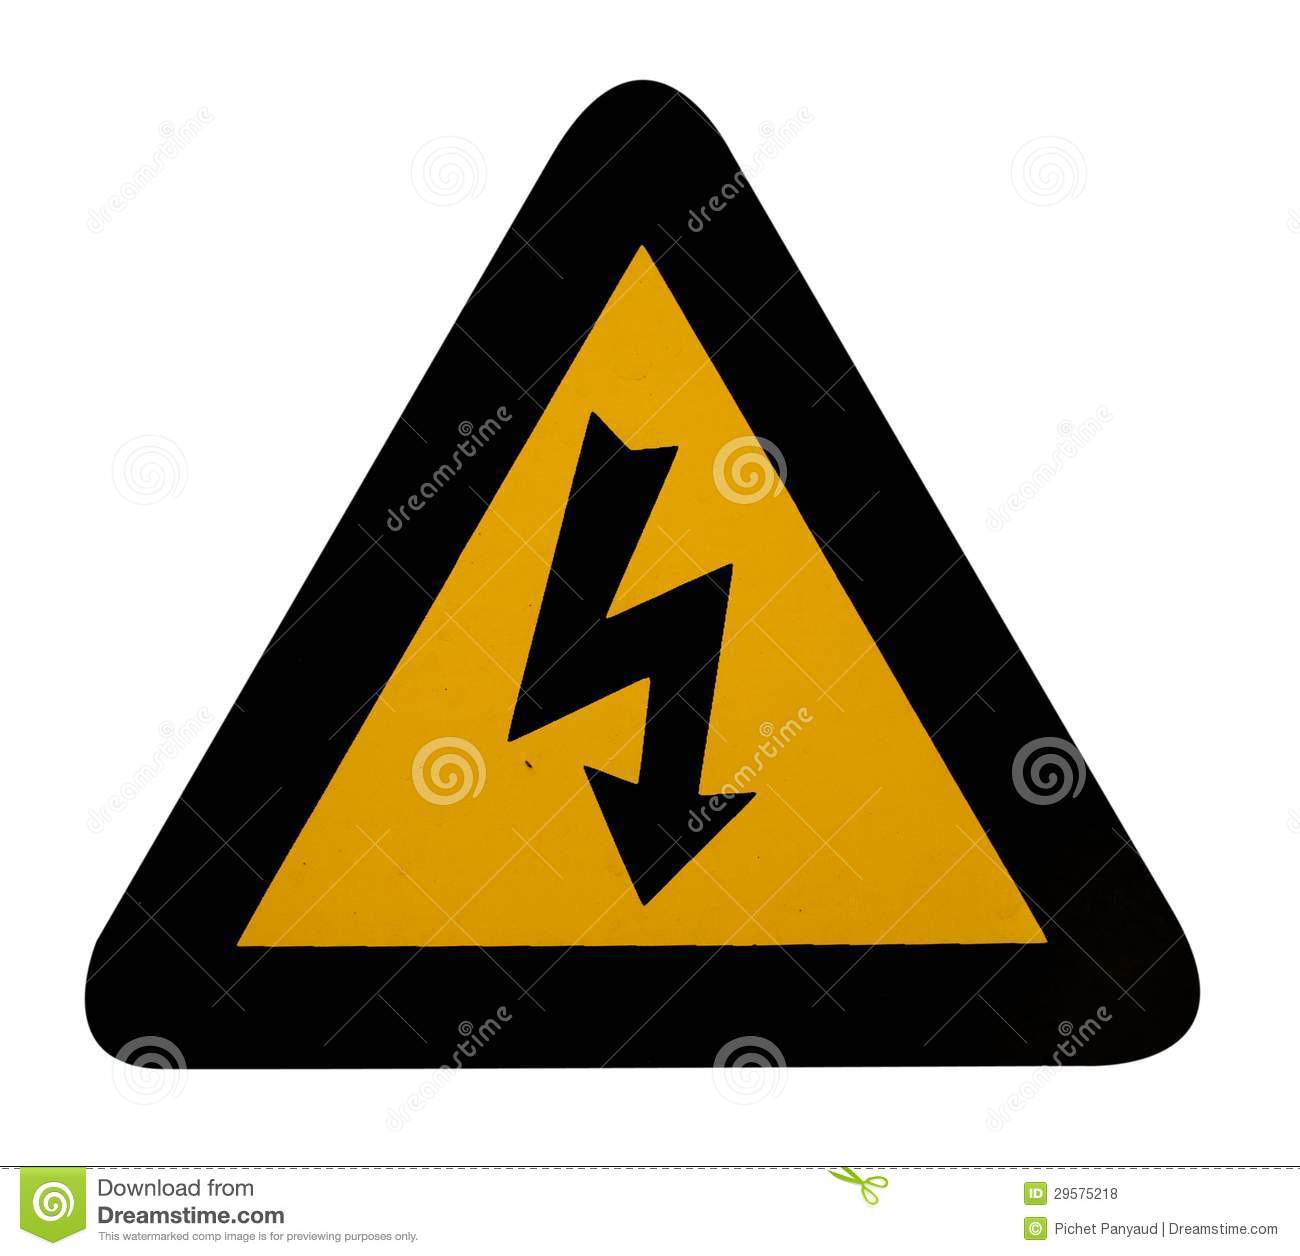 Electrical Hazard Warning Sign Royalty Free Stock Photos   Image